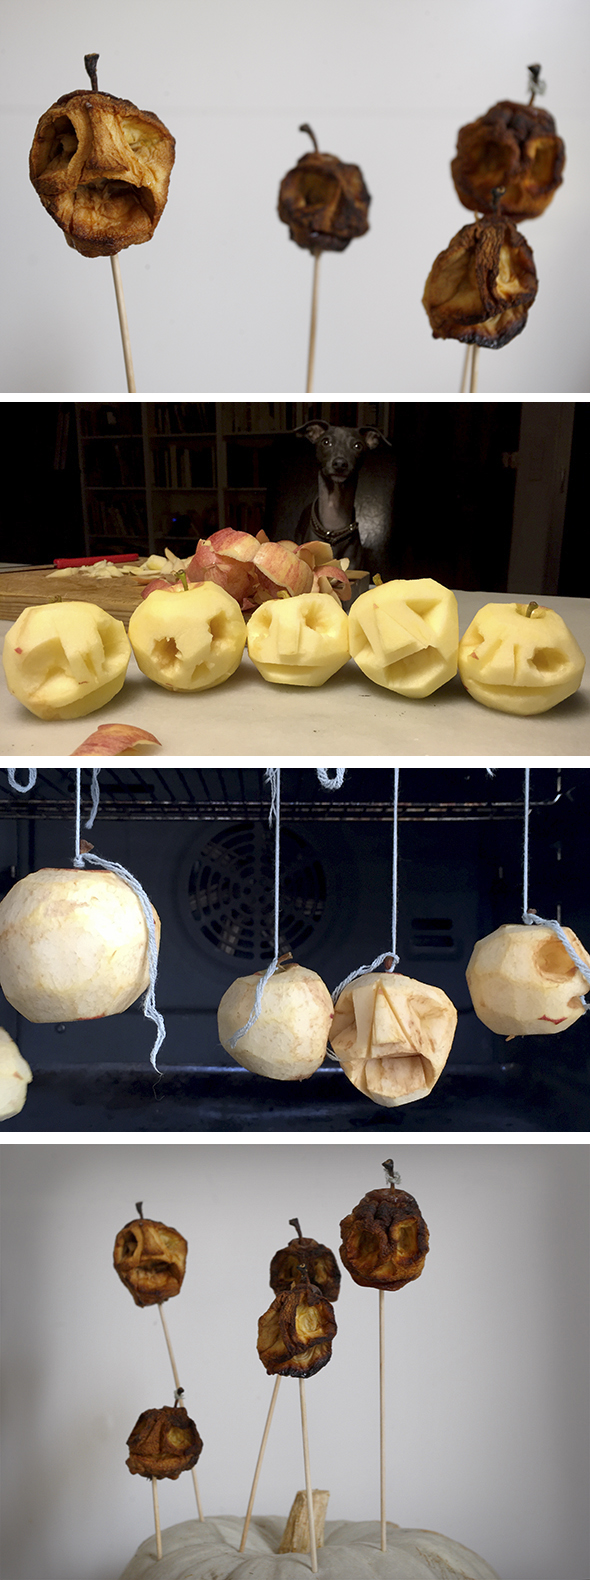 Halloween instrucion  dead shrunkheads köpfe heads manzanas apples äpfel